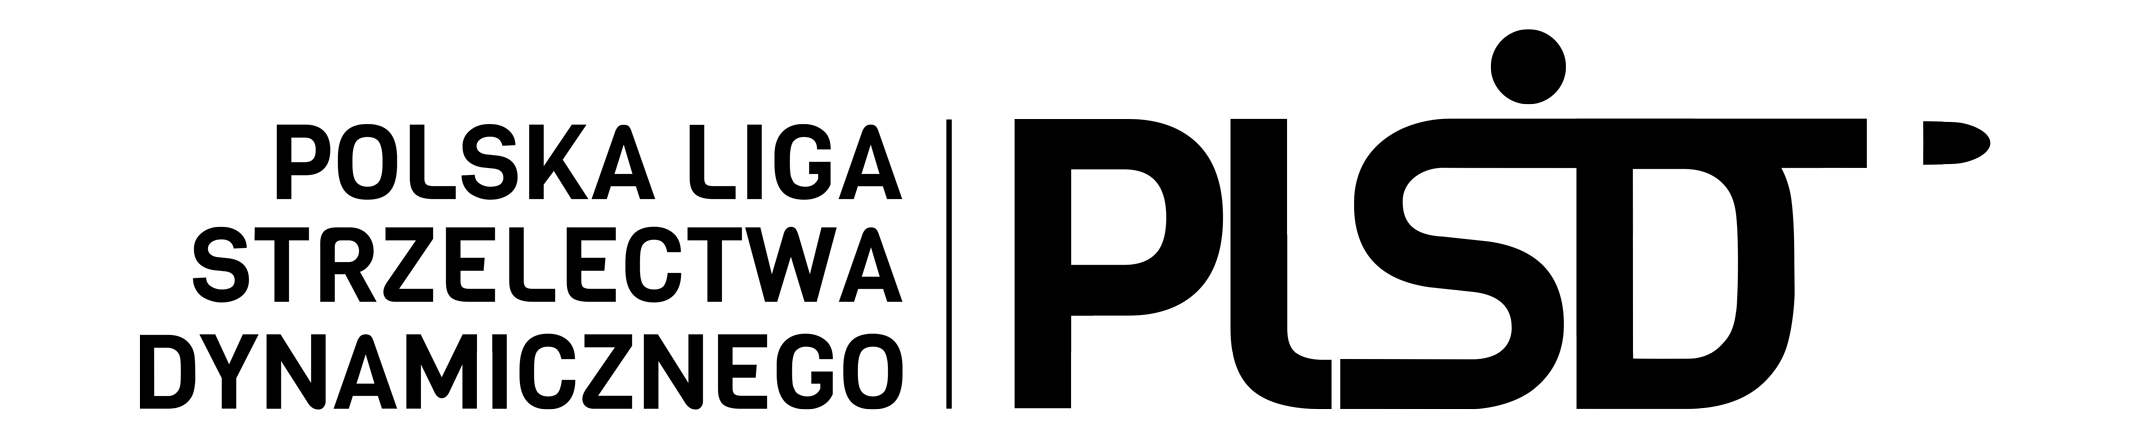 logo_PLSD_poziome.png